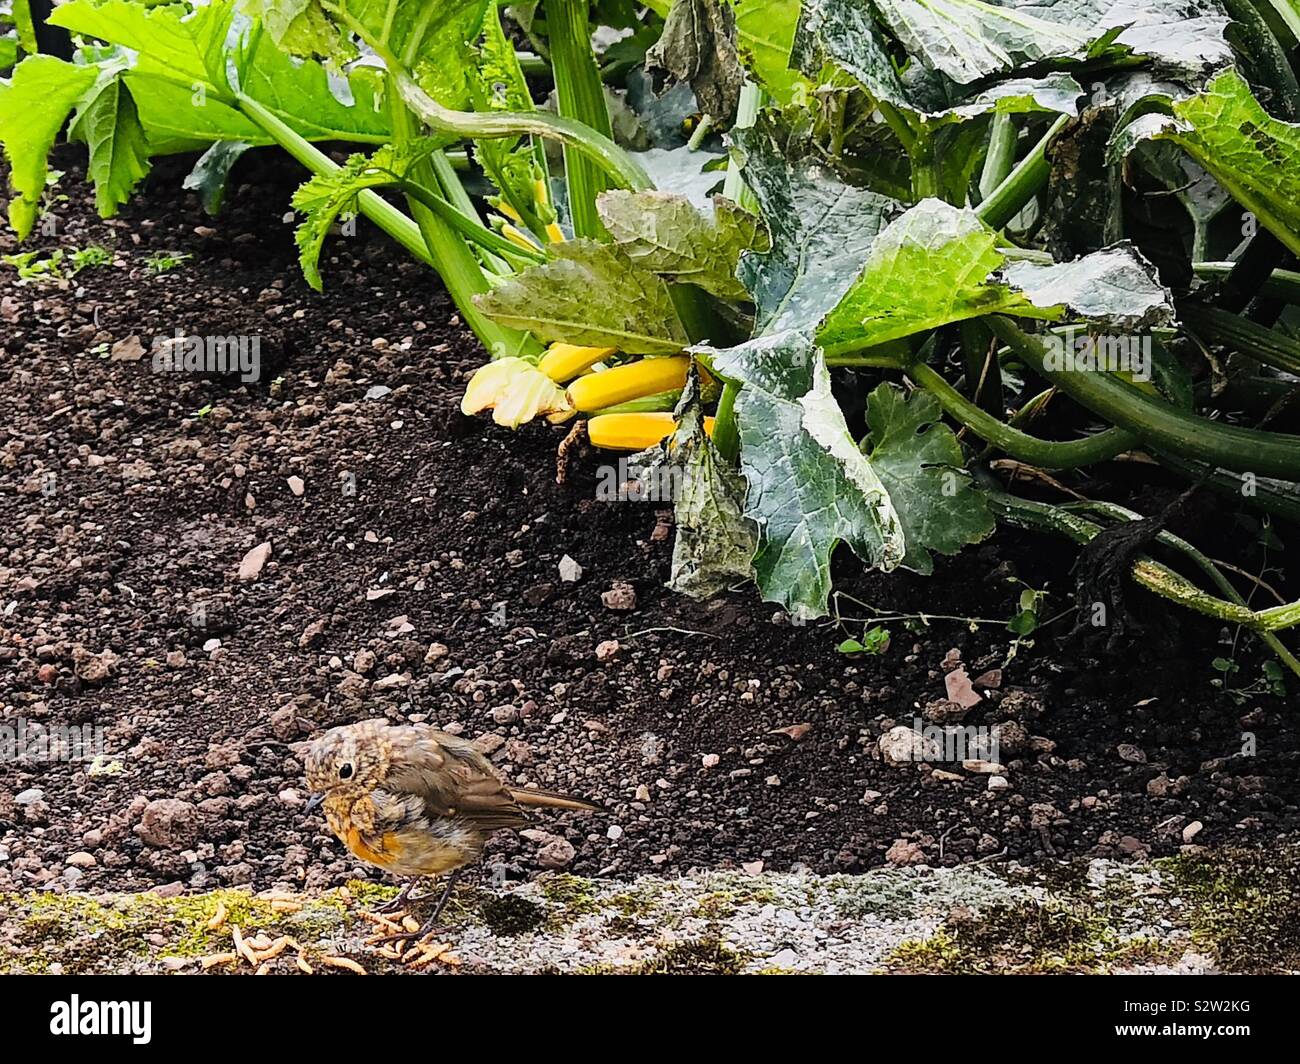 Scruffy Robin perched near a courgette plant in the garden Stock Photo